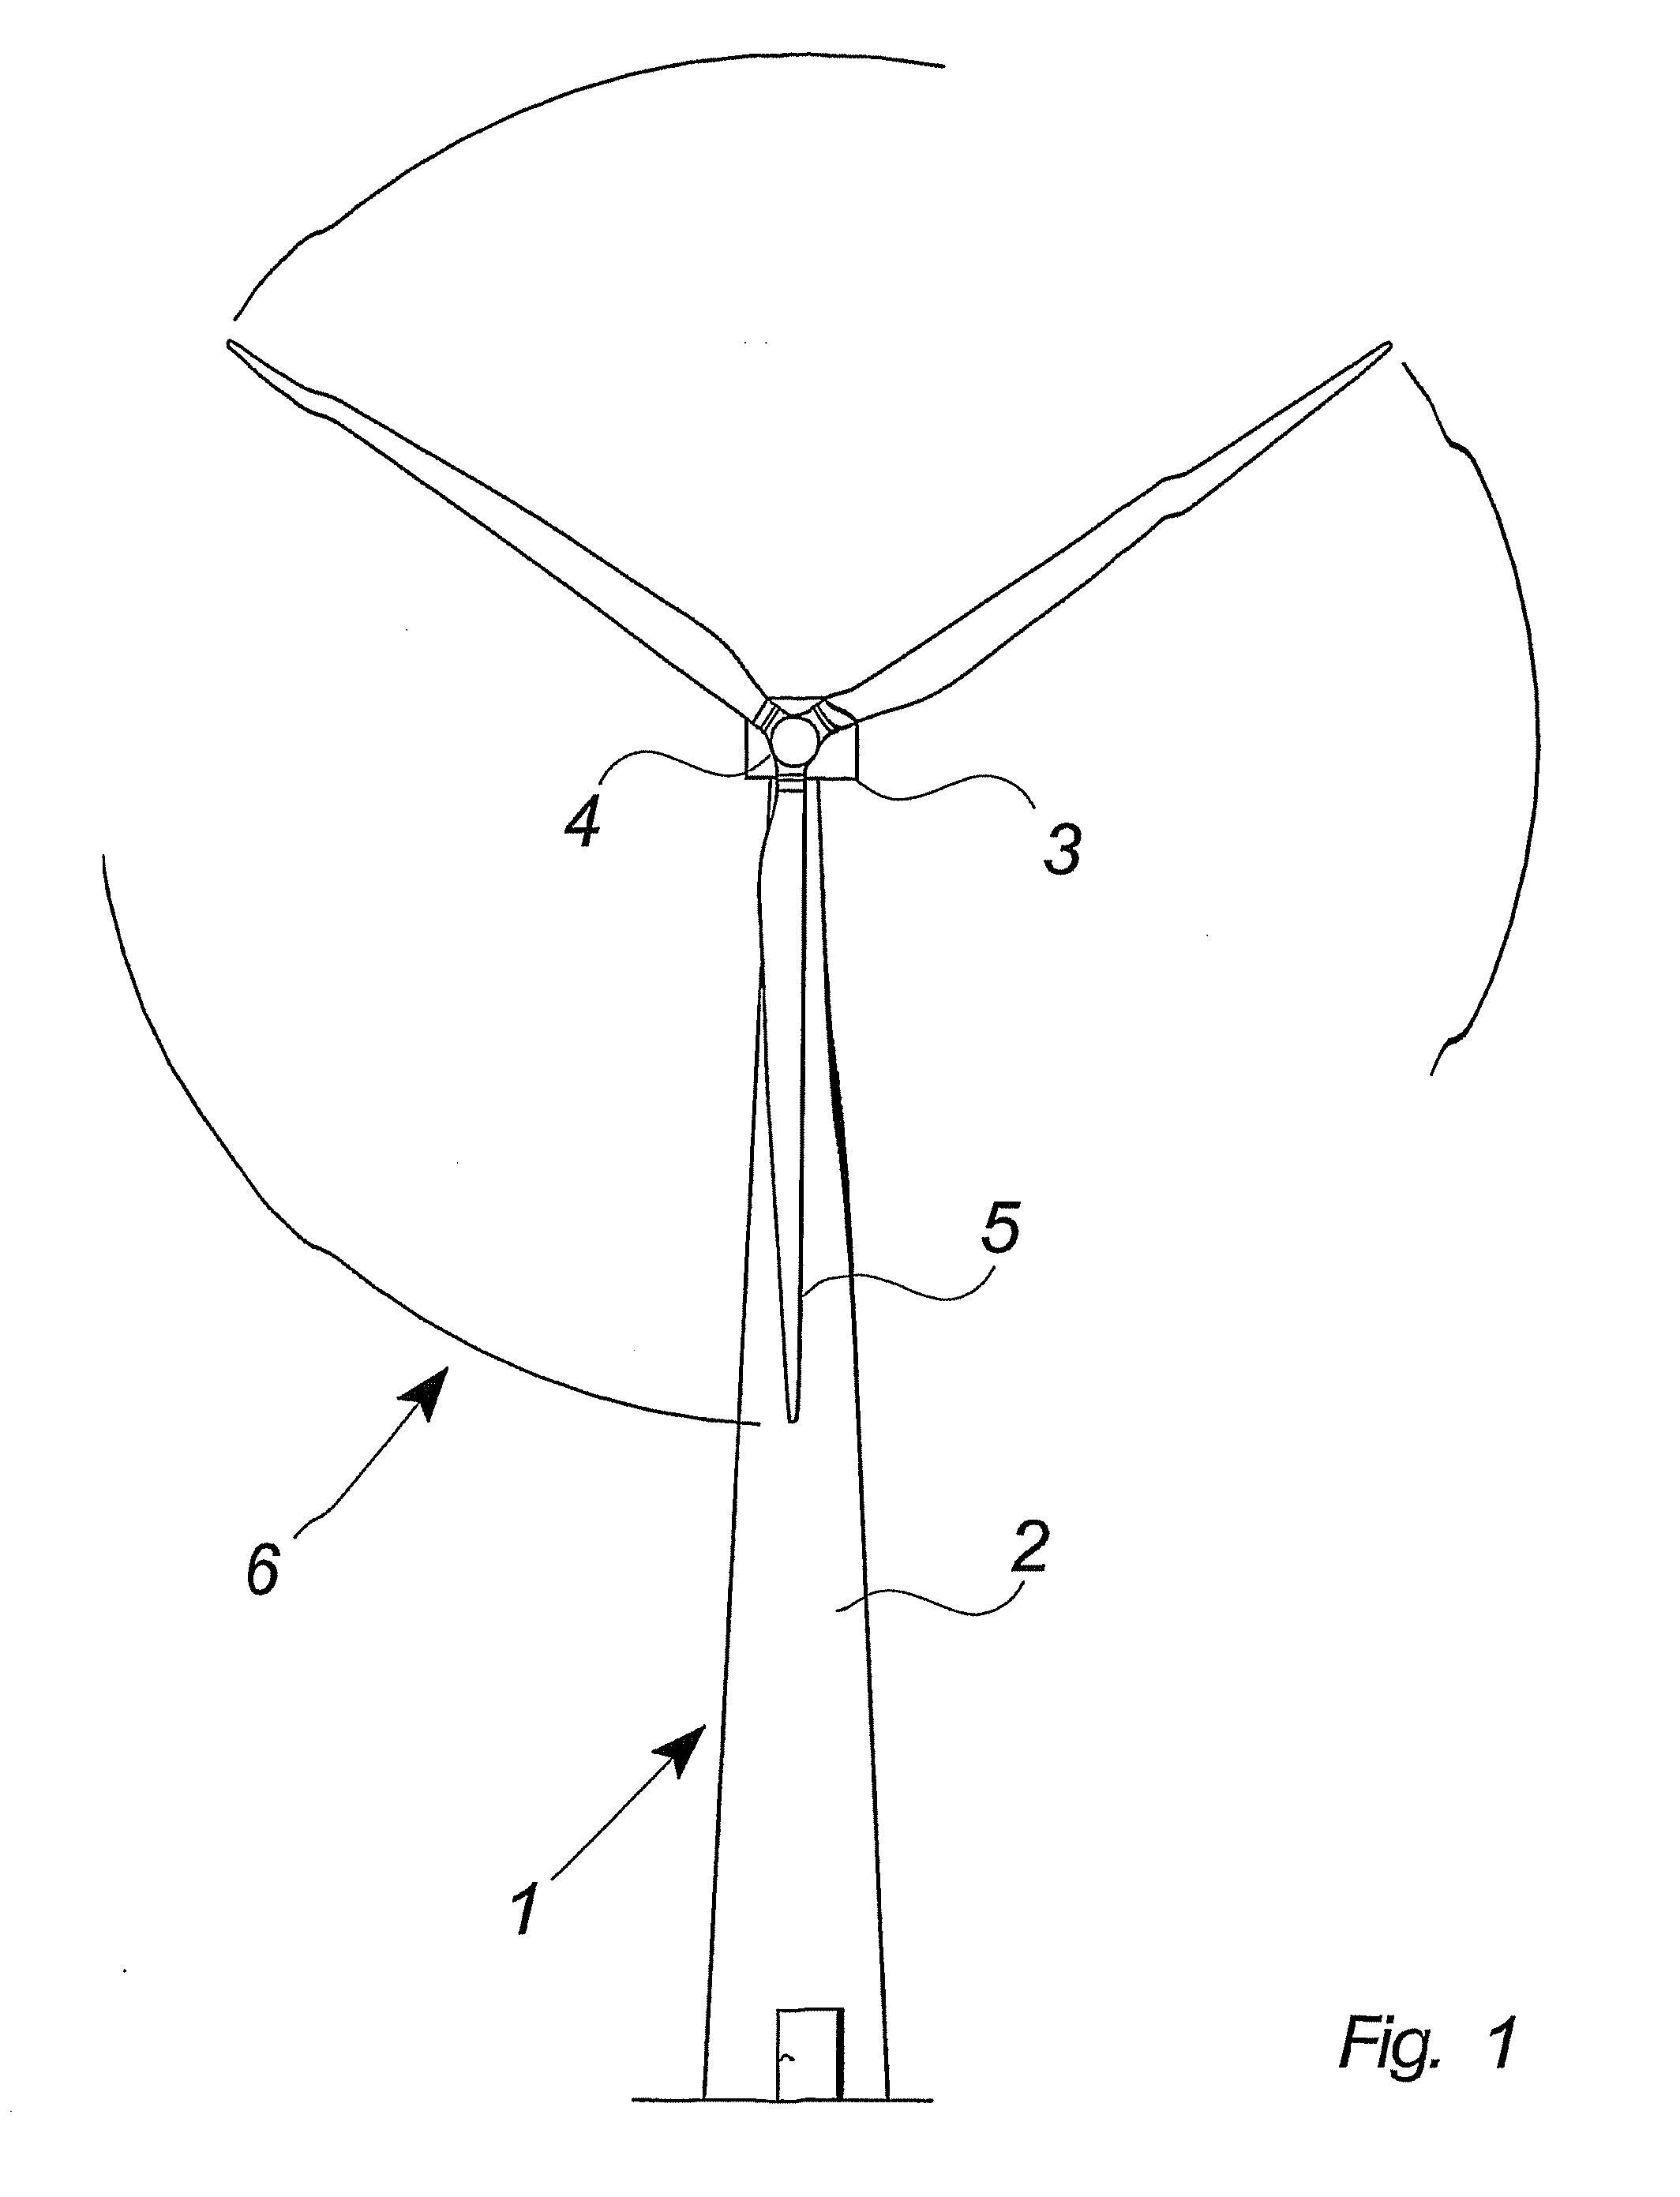 Variable rotor speed wind turbine, wind park, method of transmitting electric power and method of servicing or inspecting a variable rotor speed wind turbine